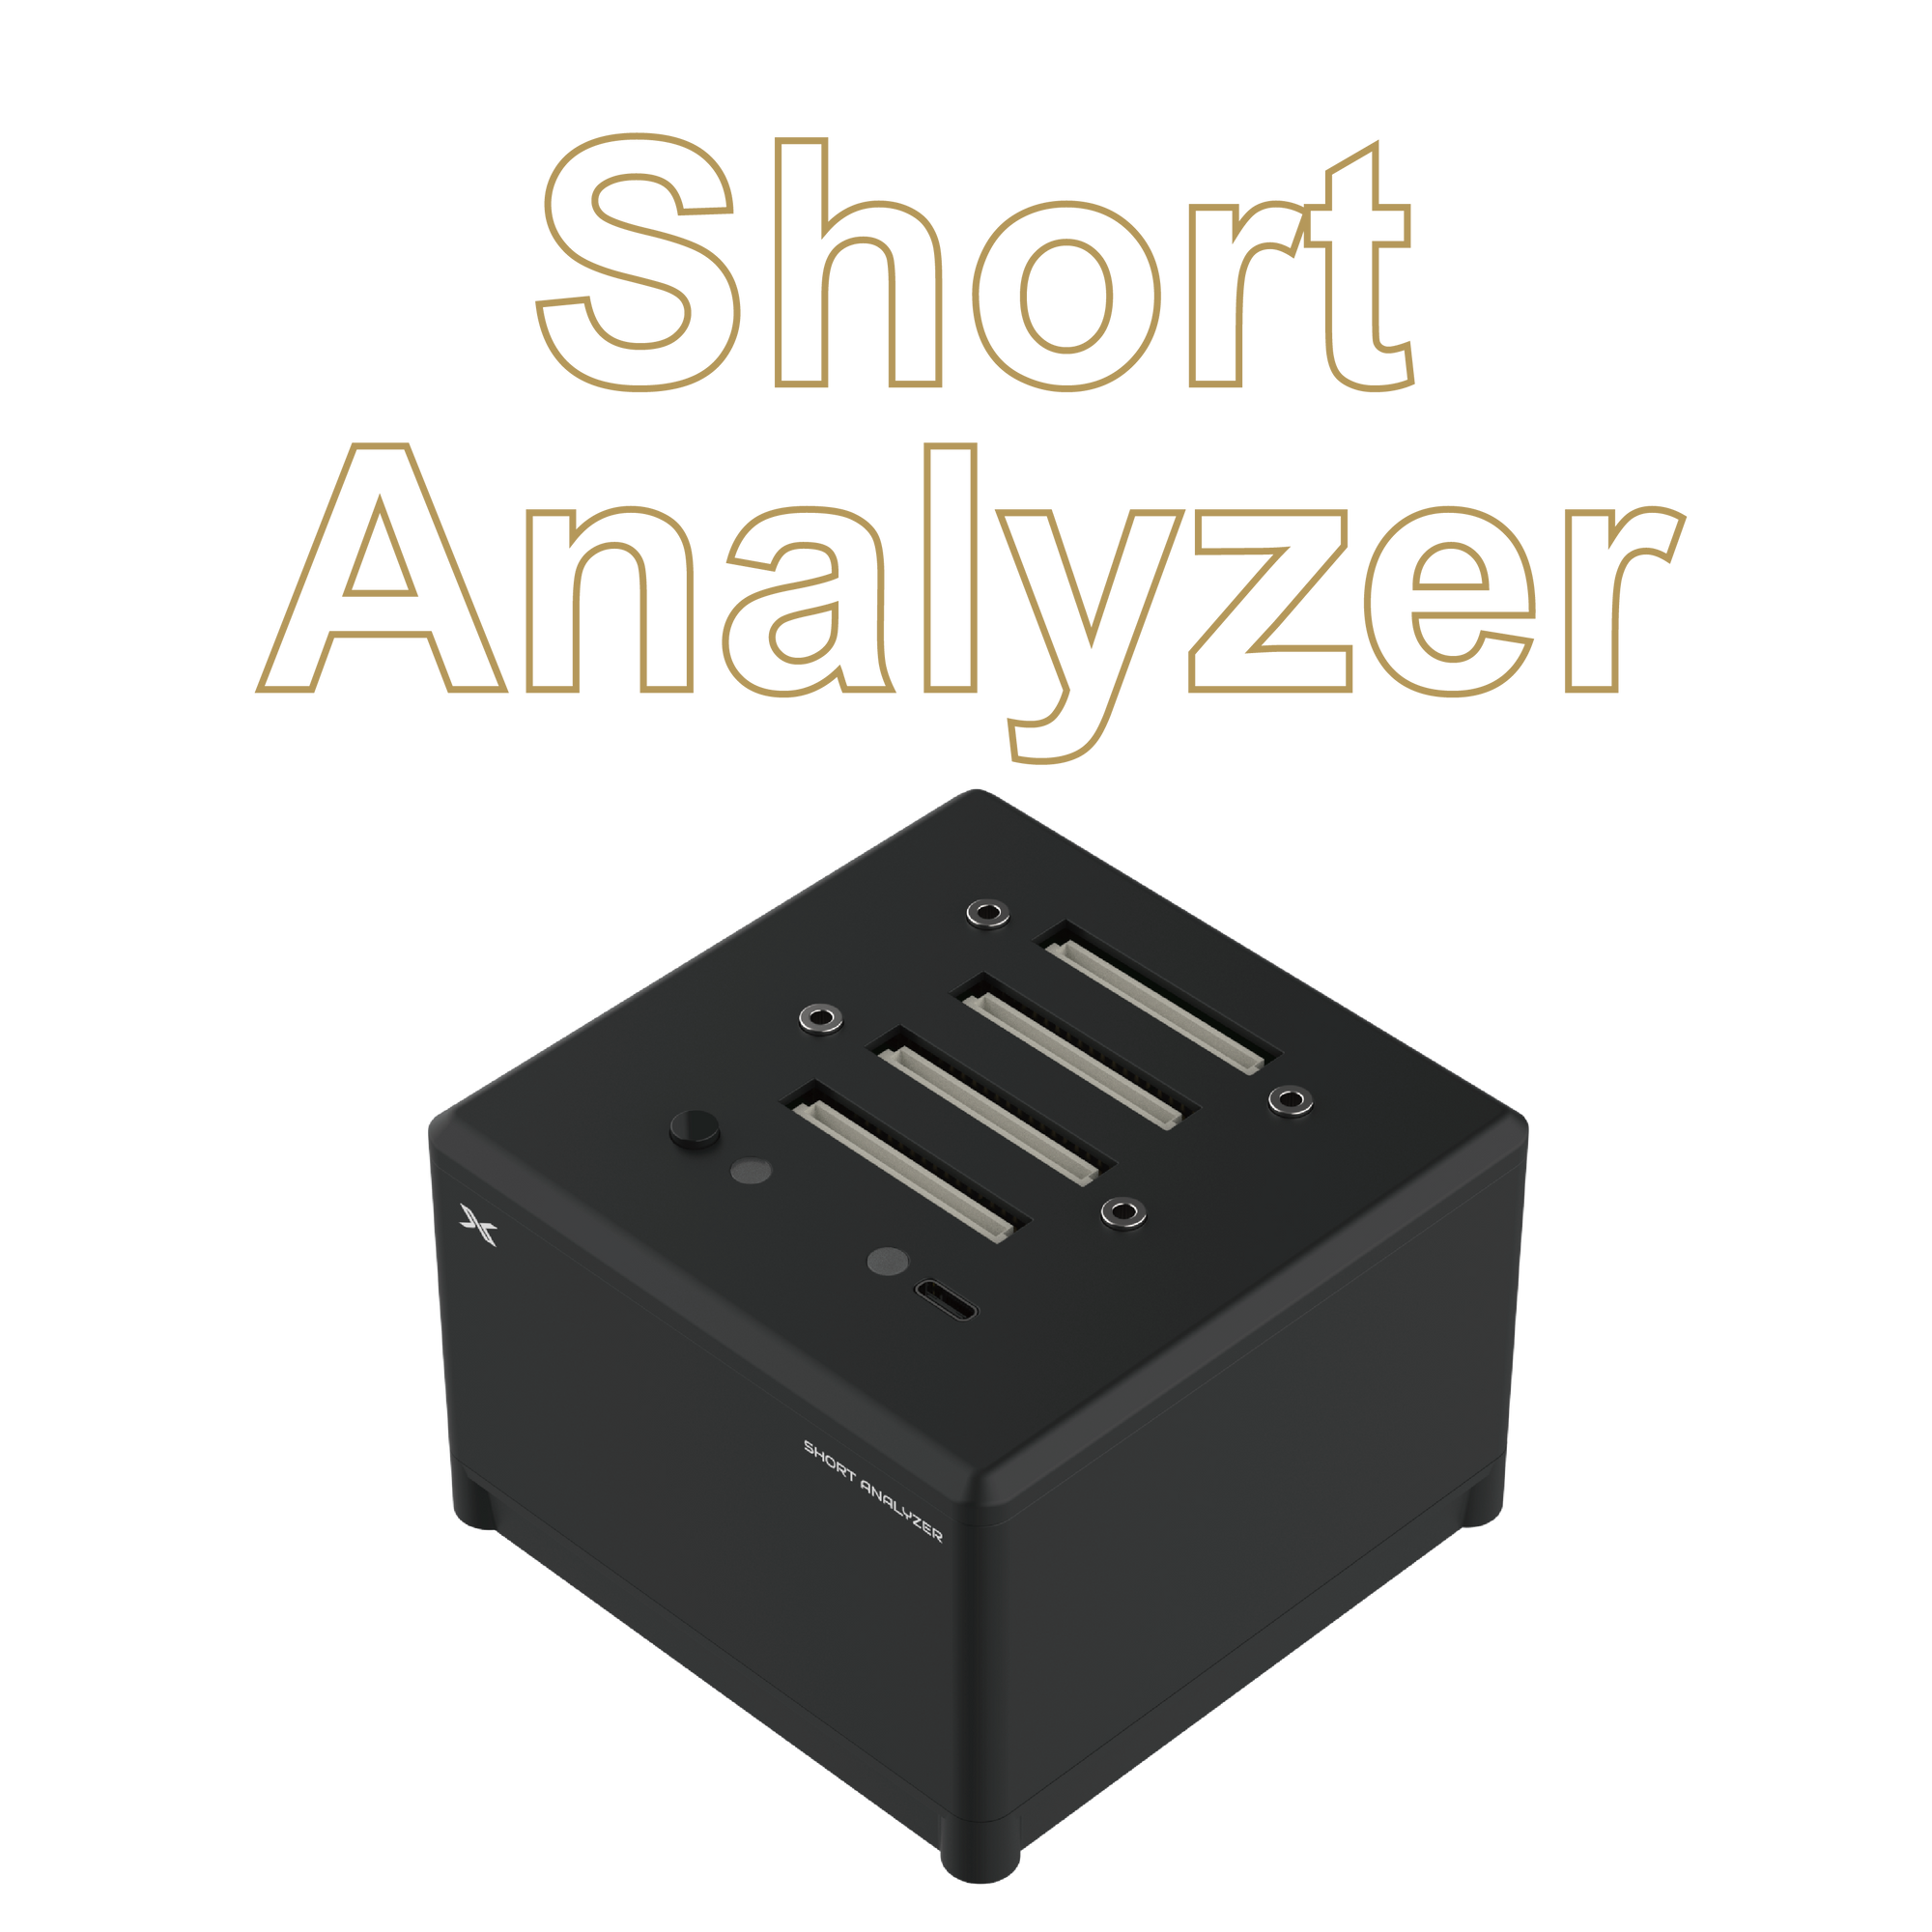 Short circuit analyzer